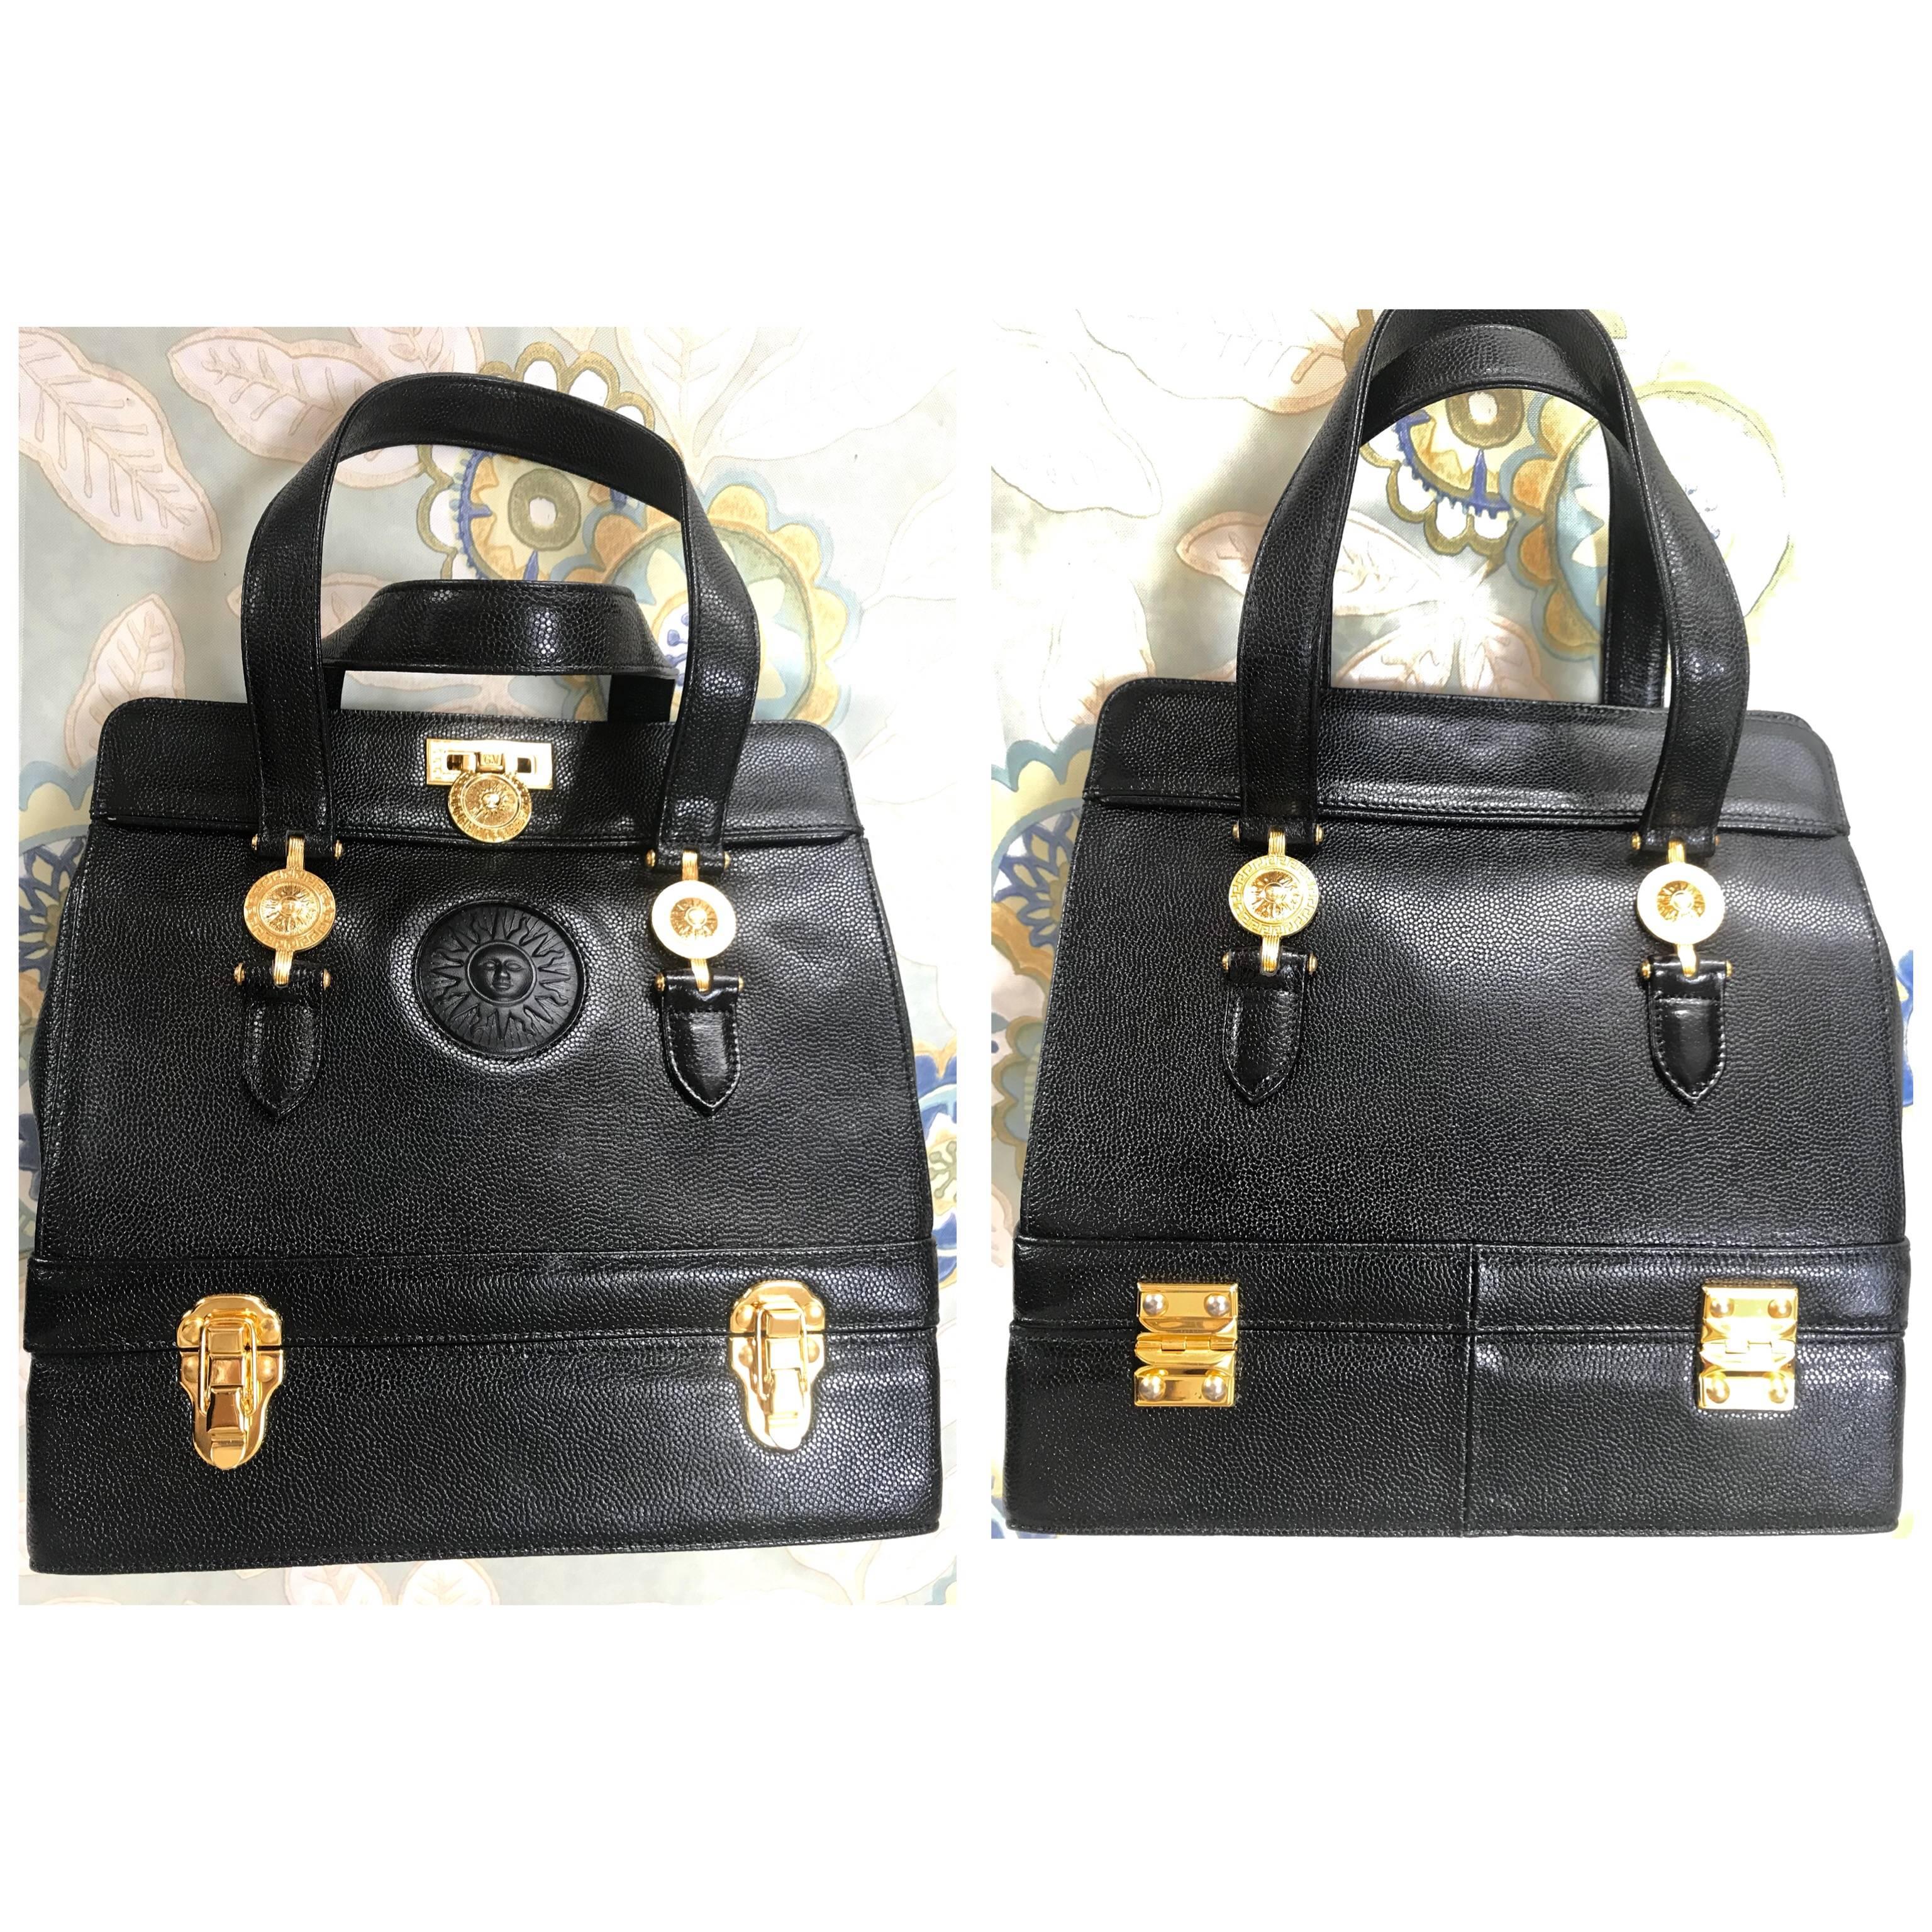 Women's MINT. Vintage Gianni Versace black caviar type leather birkin doctor's bag. hand